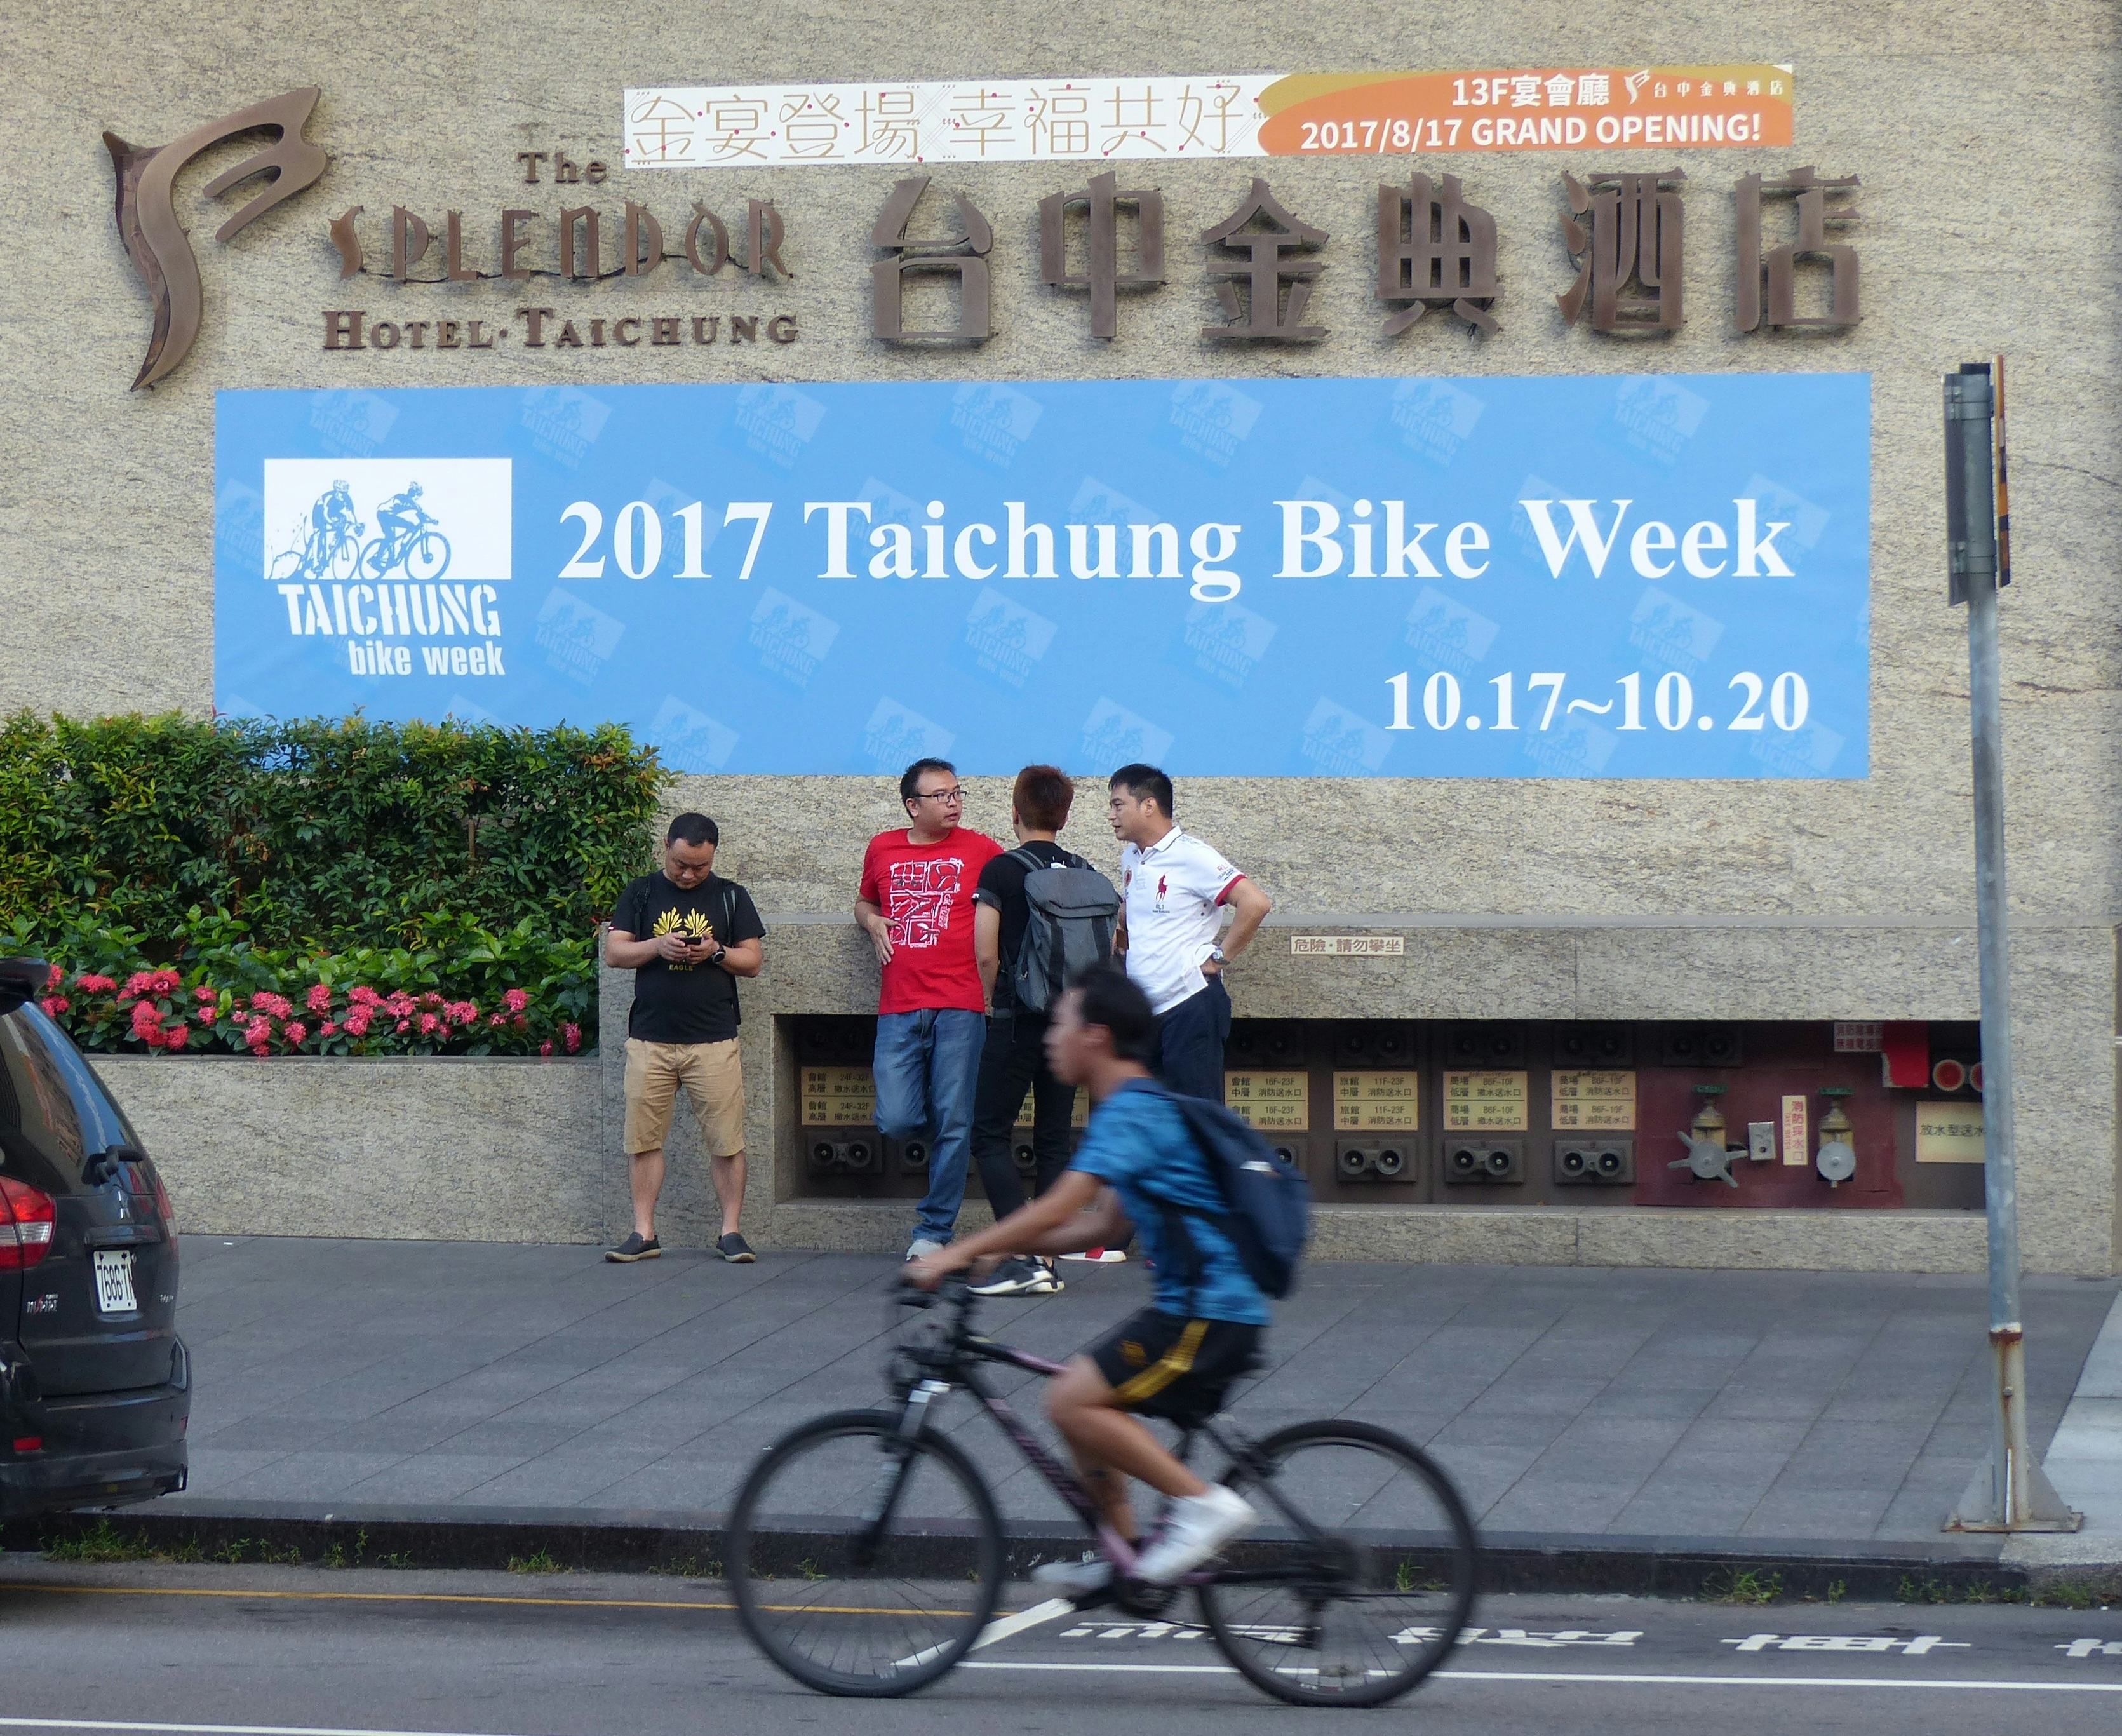 No less than 470 exhibitors this year at Taichung Bike Week with strikingly e-bikes hardly visible at the booths. – Photo Bike Europe 